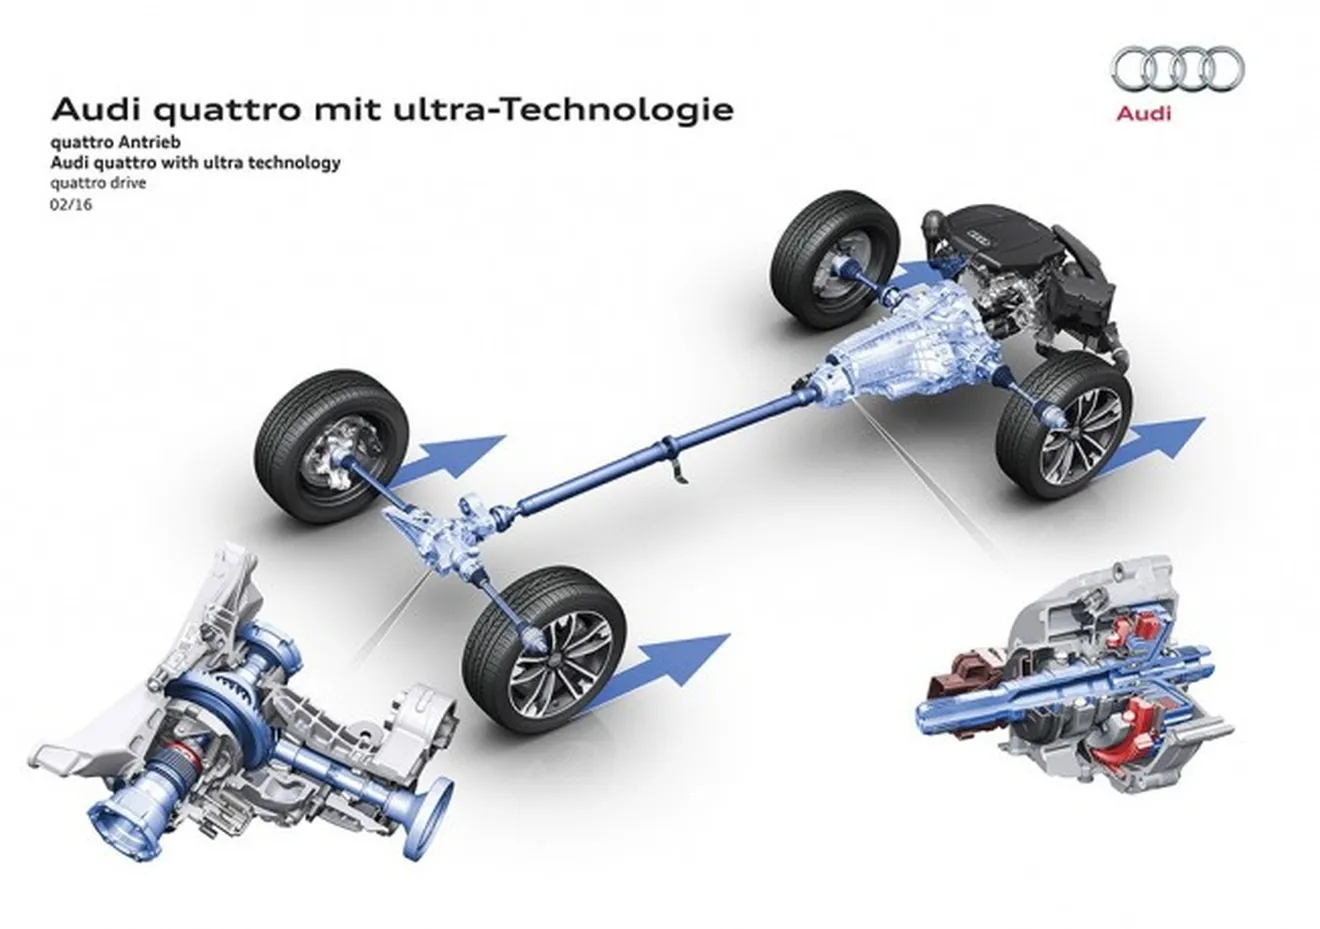 Audi quattro con tecnología ultra